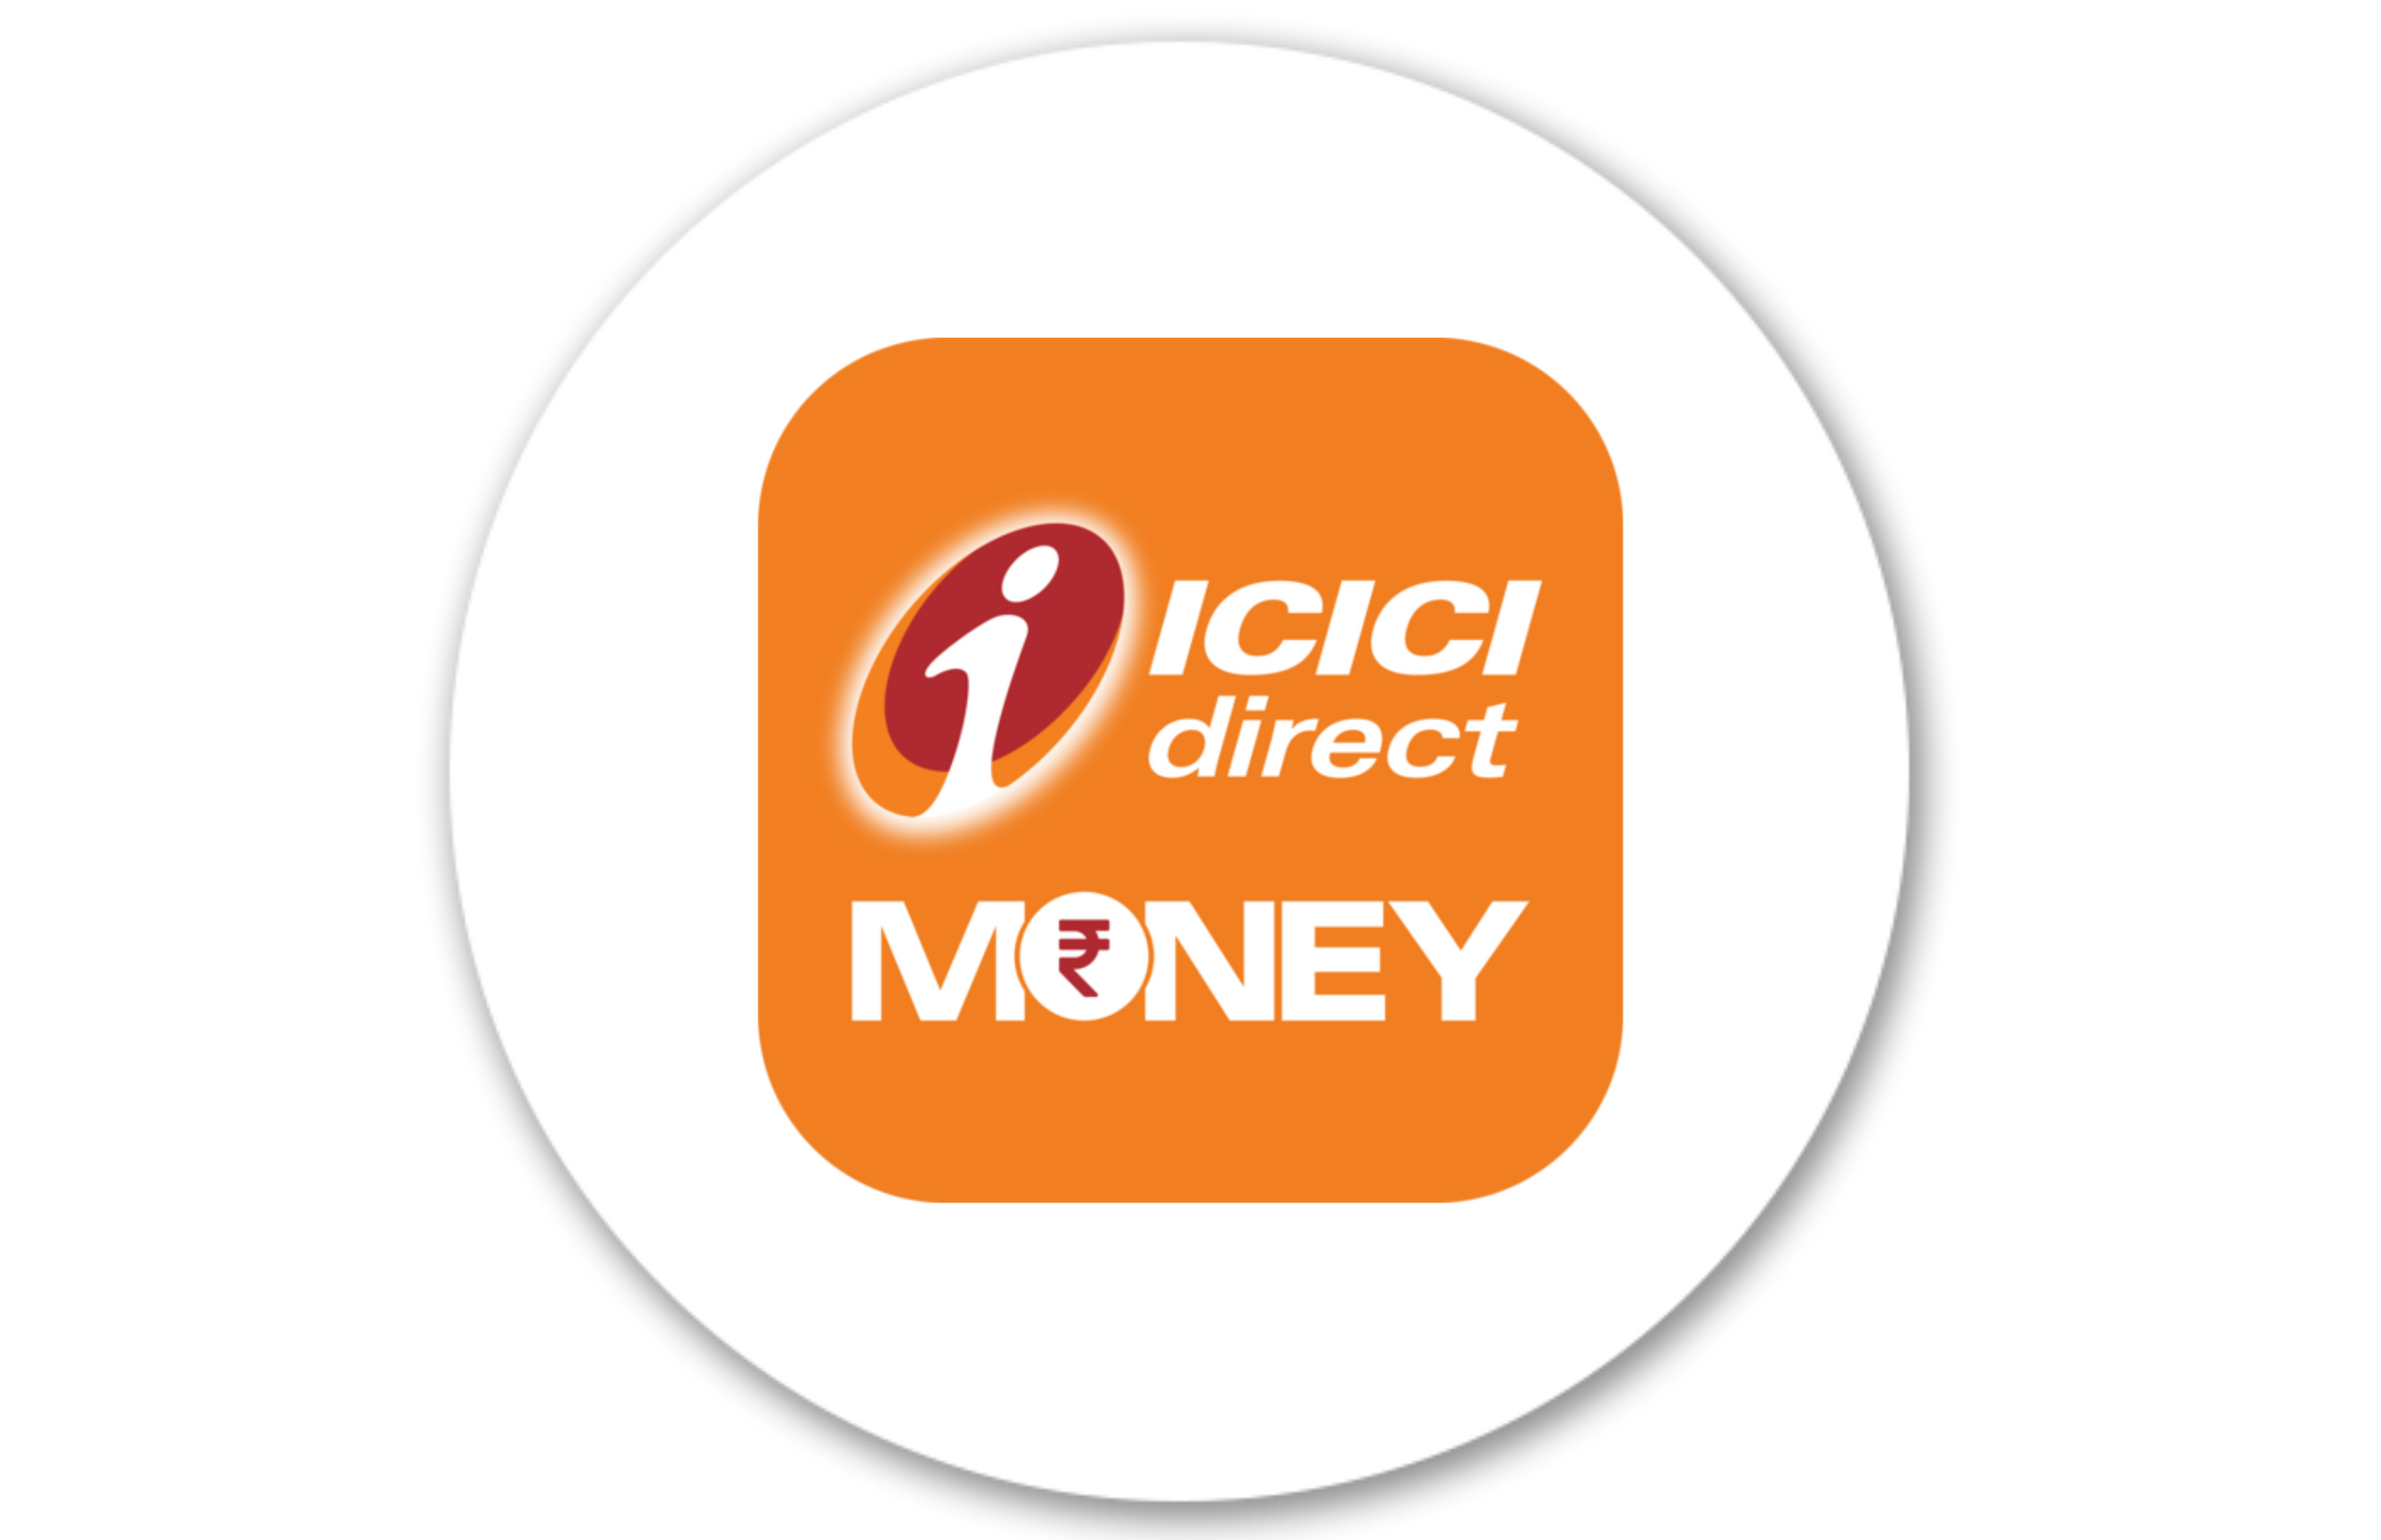 ICICI Bank Credit Card